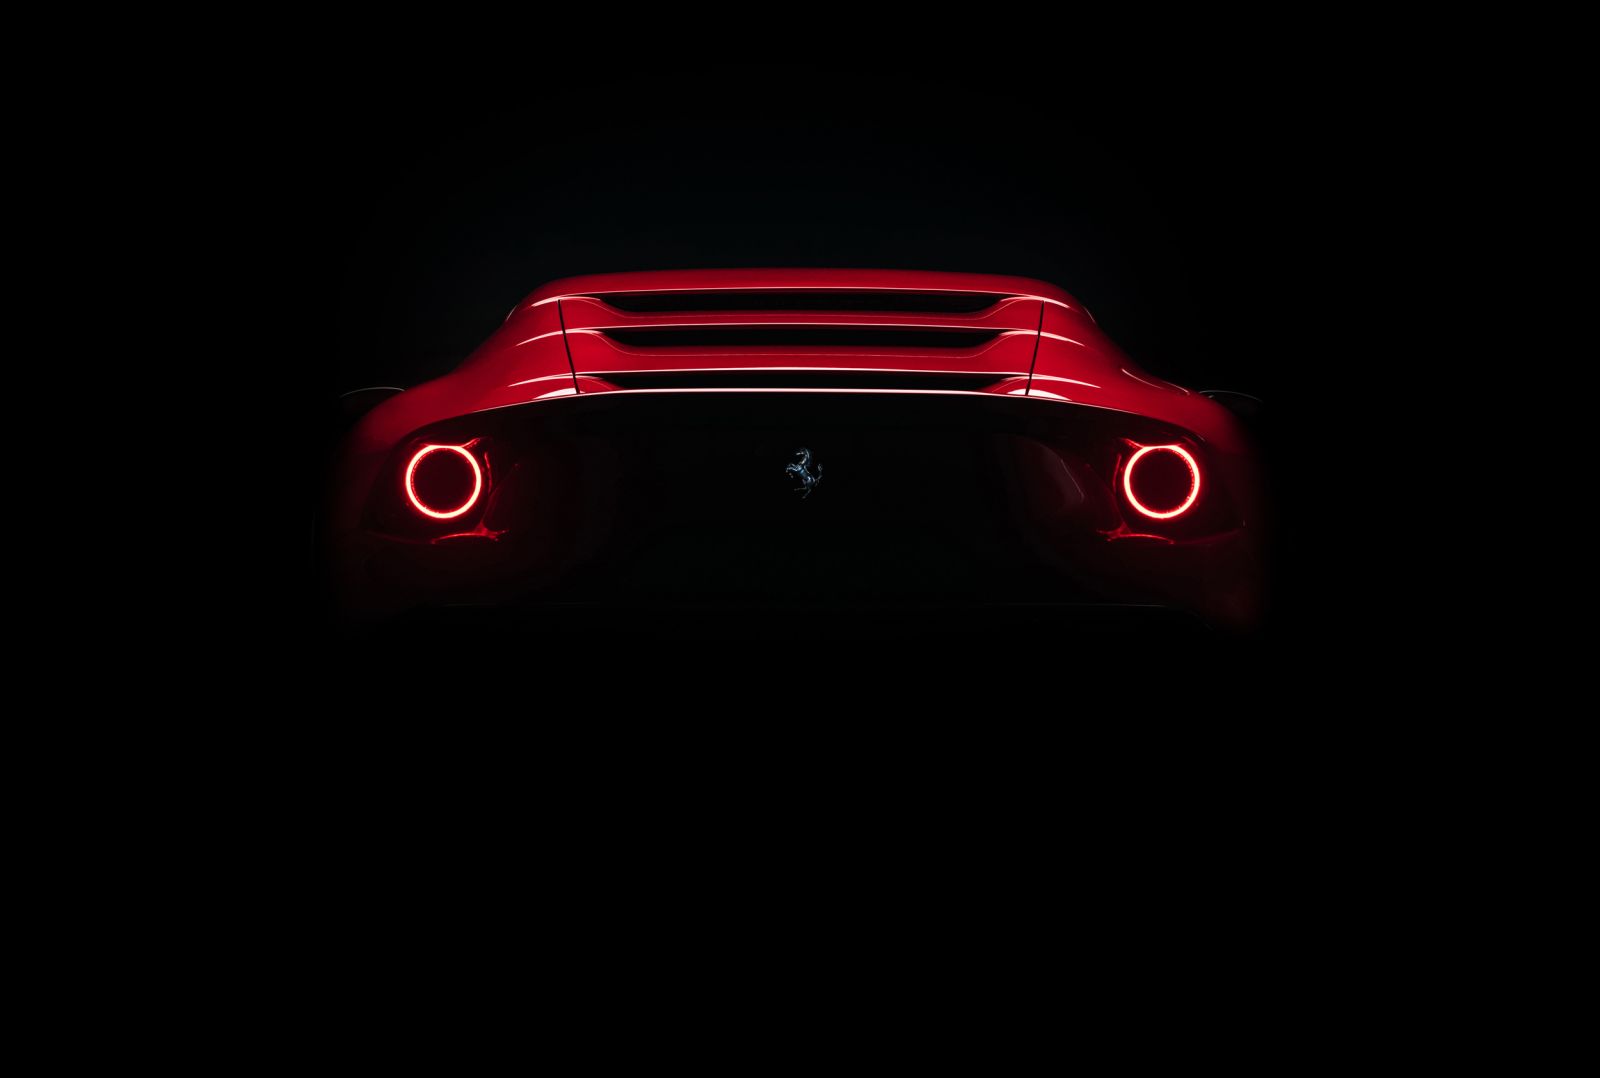 Ferrari Omologata